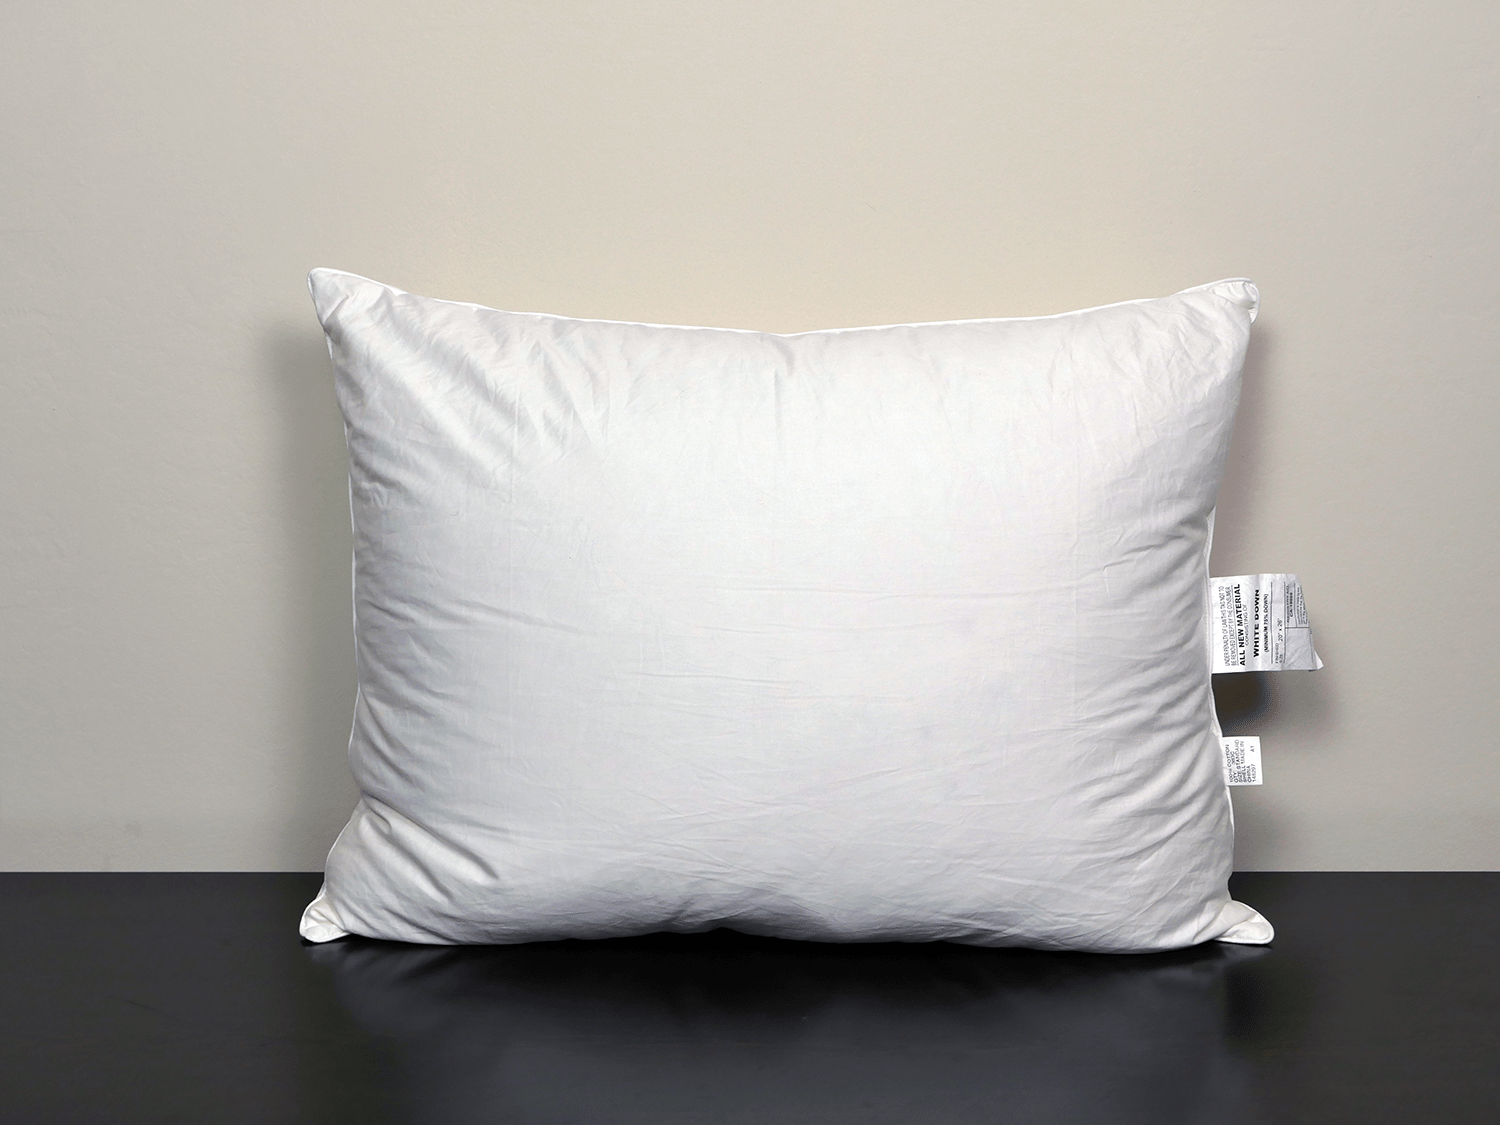 Virgo model of the Slumbr pillow series